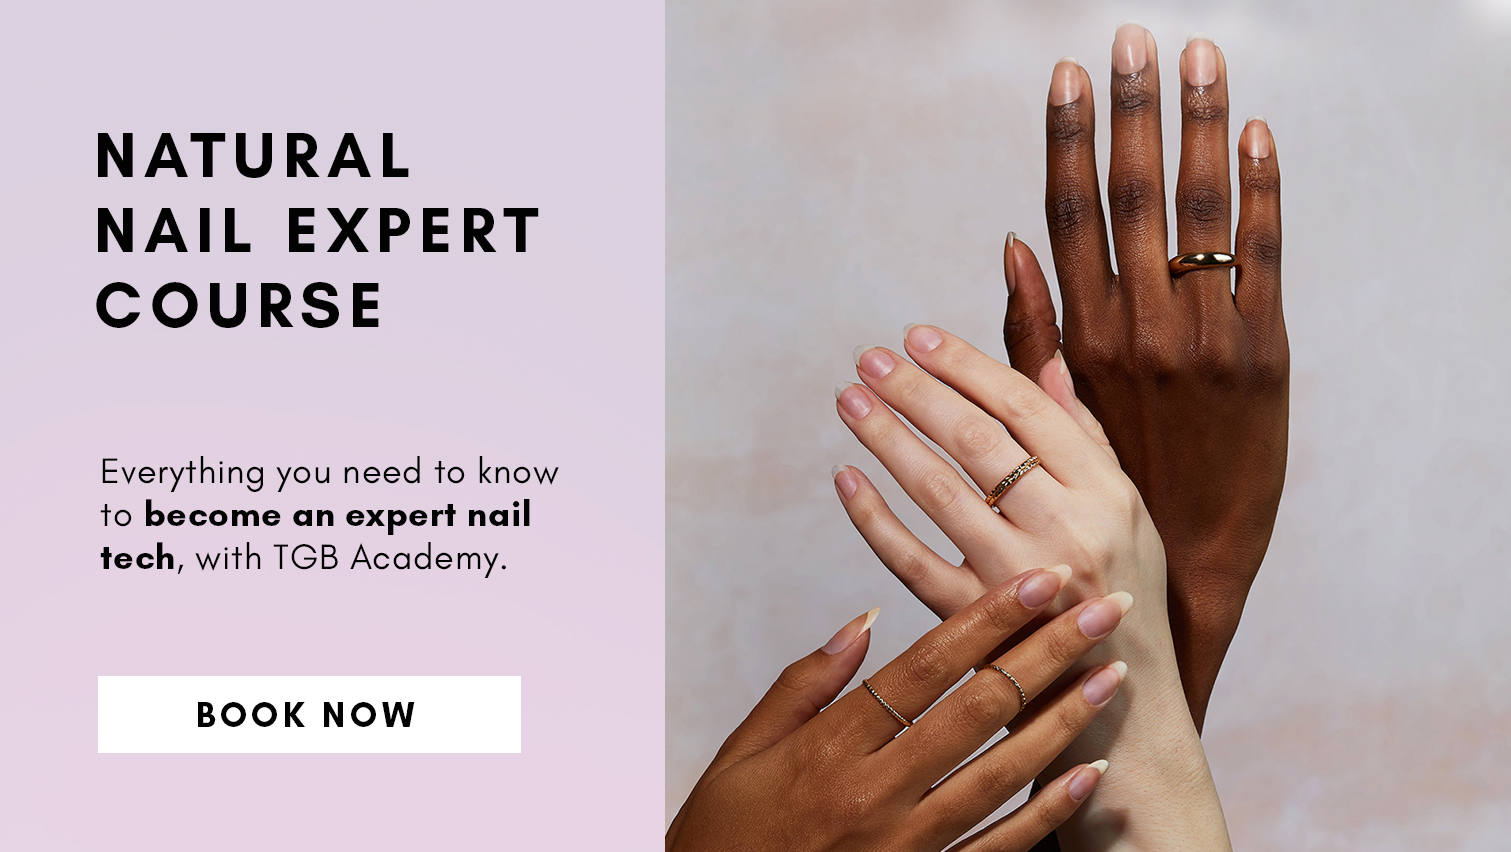 NEW Natural Nail Expert Course